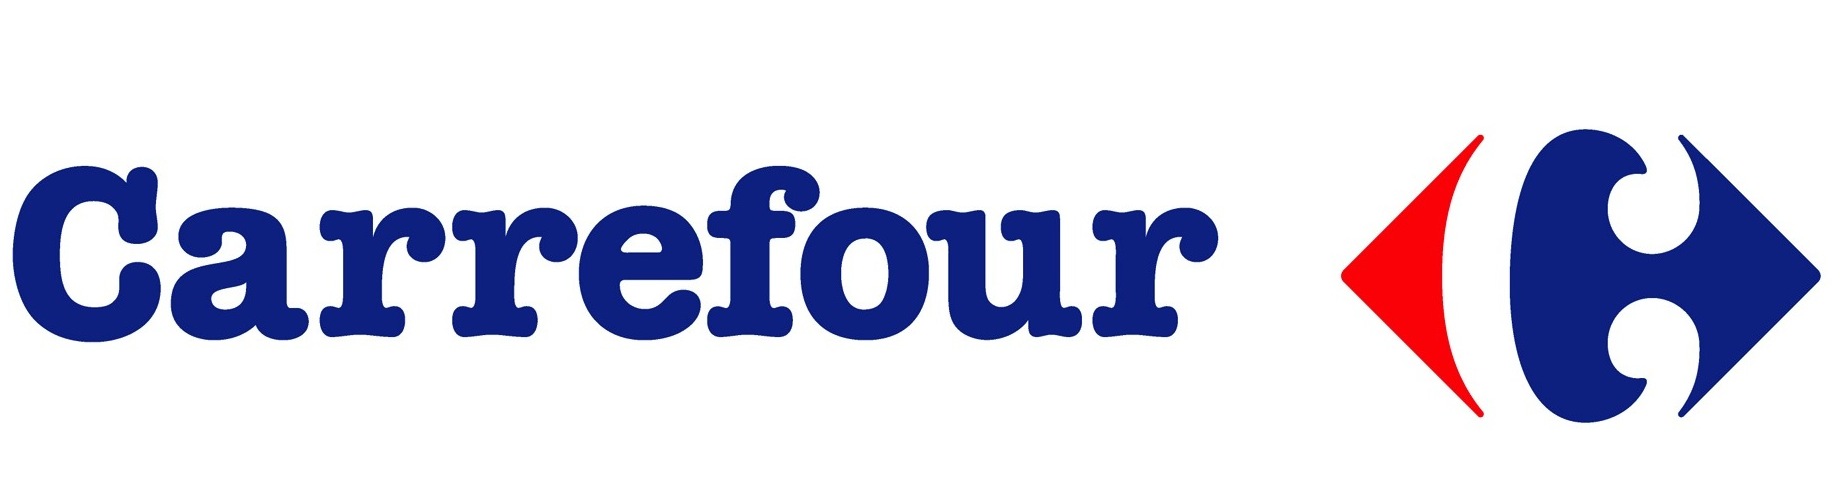 Carrefour Logo 04 - Carrefour, Transparent background PNG HD thumbnail